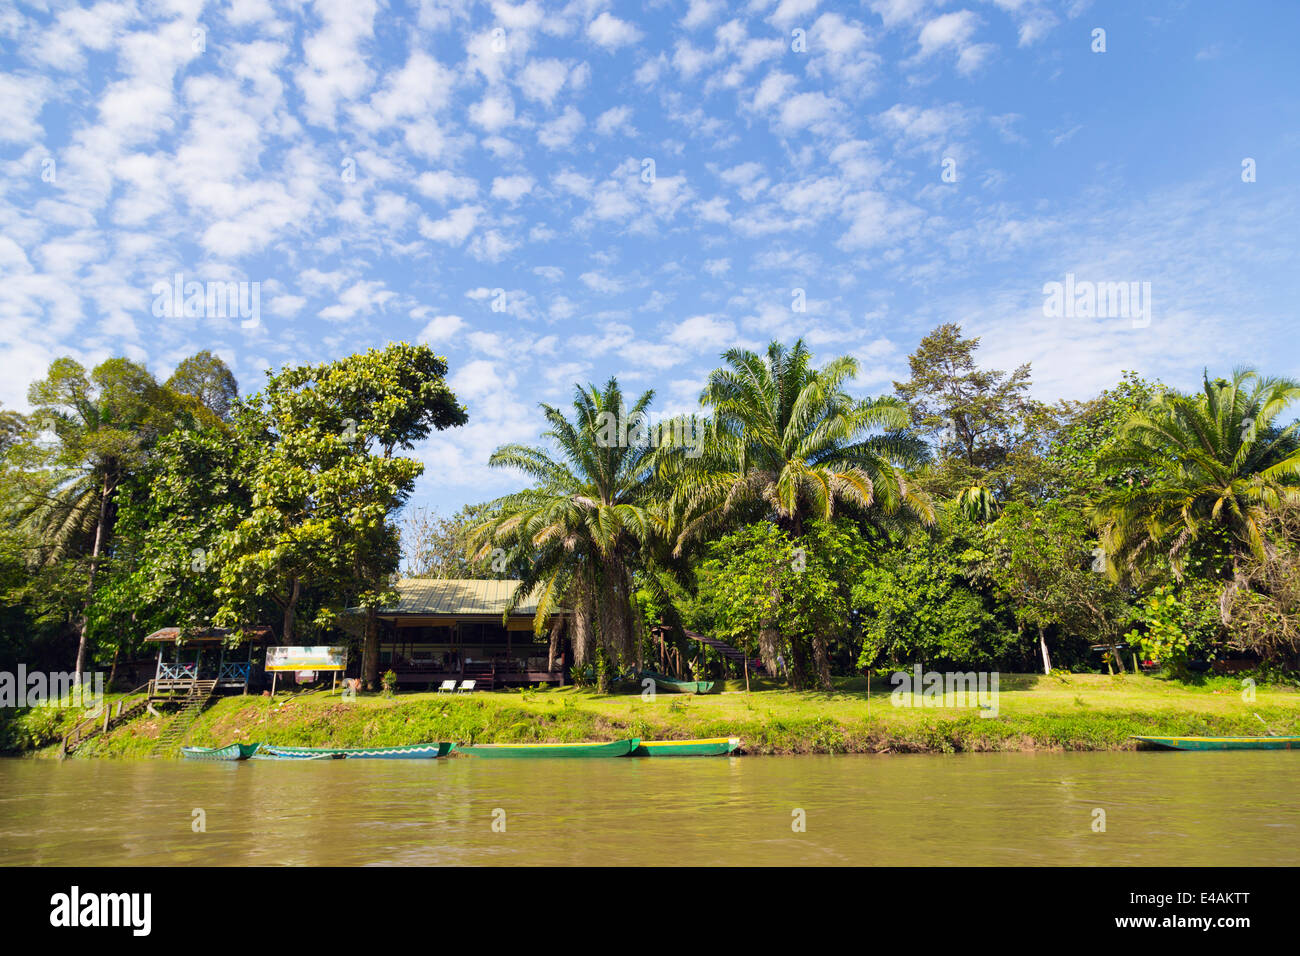 Del sudeste de Asia, el Reino de Brunei, Ula Temburong National Park Foto de stock